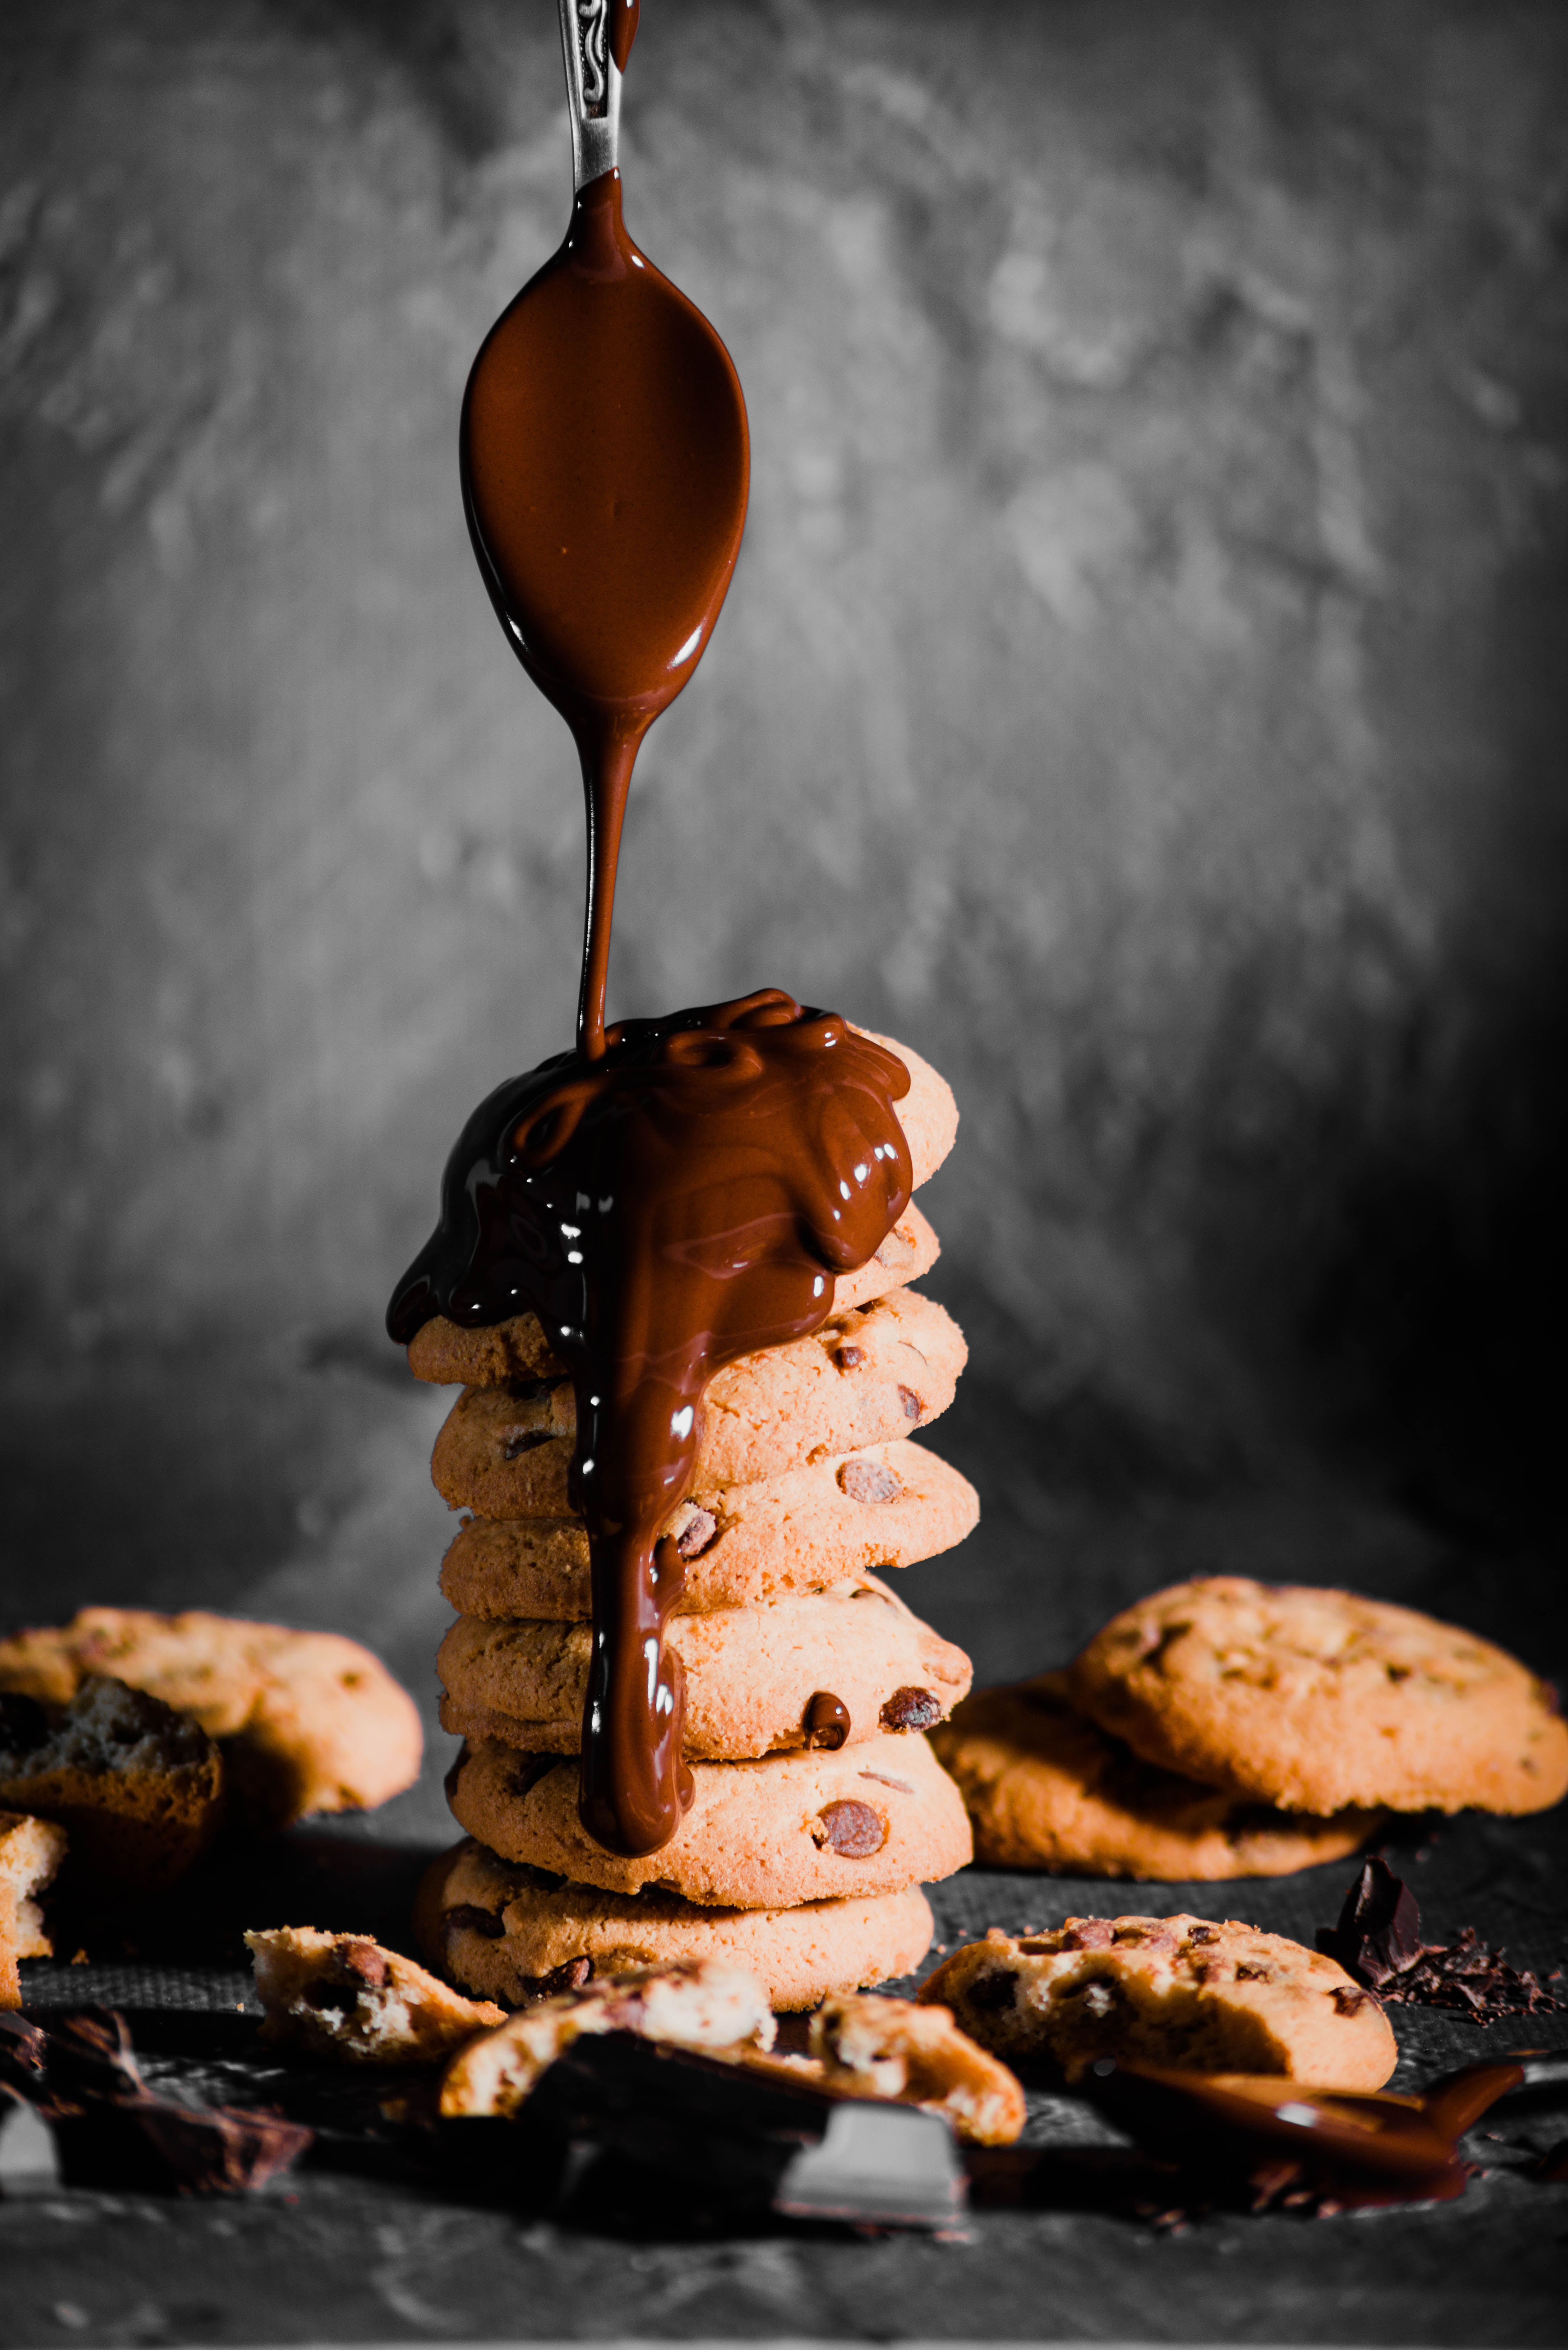 Chocolate cream on cookies